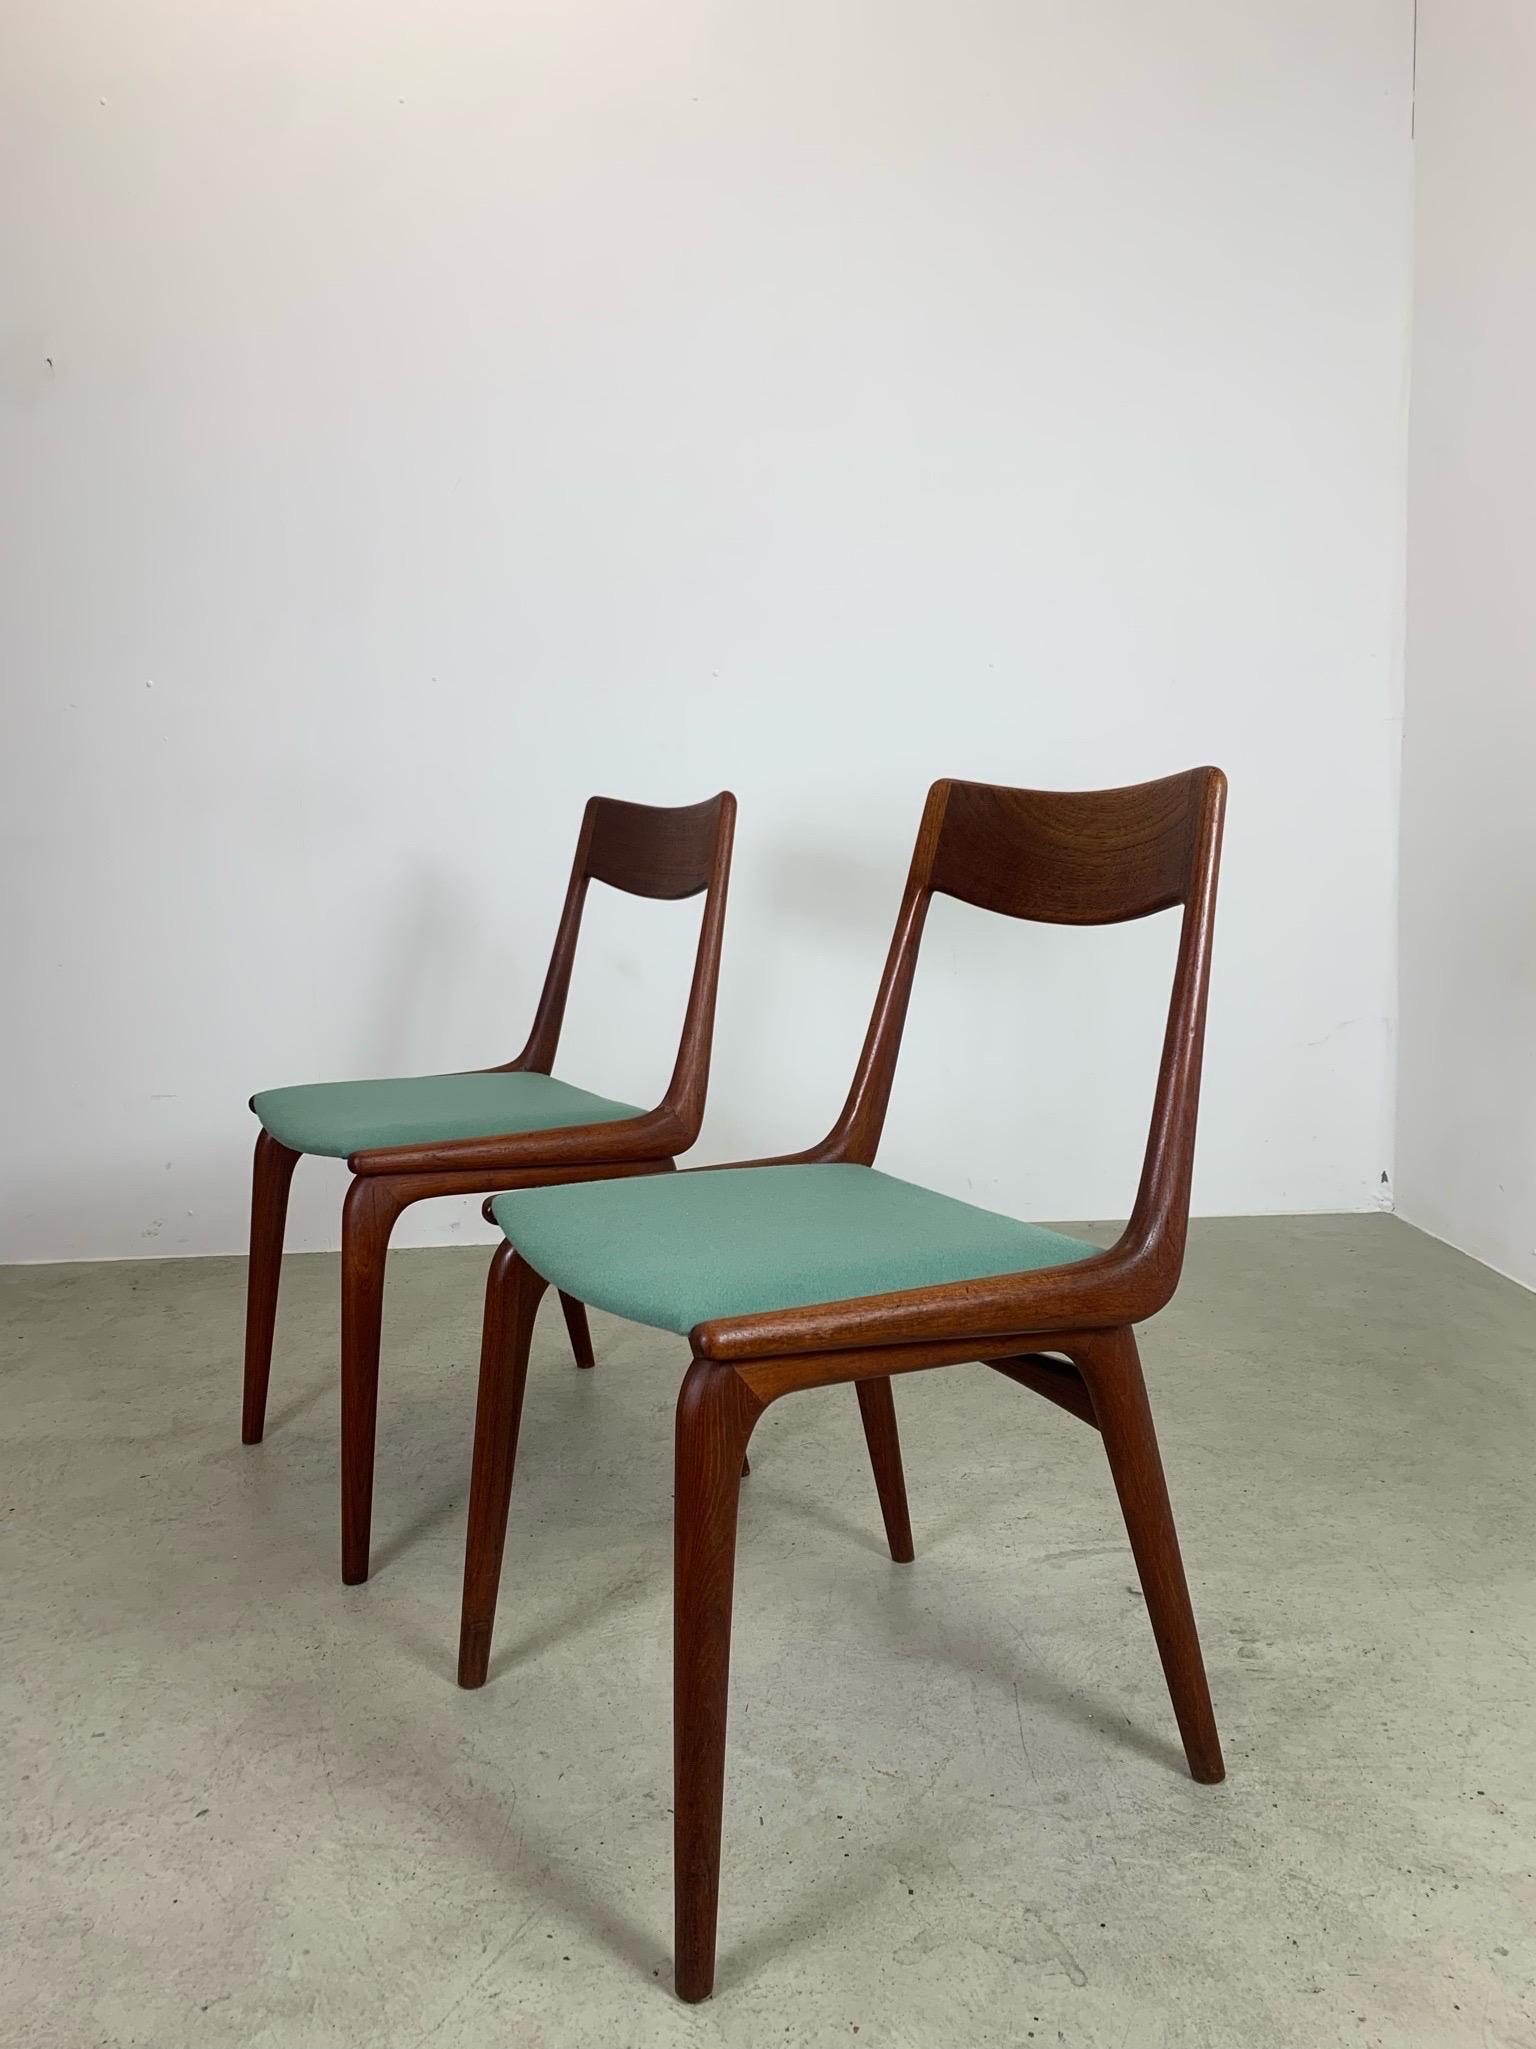 4x Danish Teak Boomerang Chairs by Alfred Christensen, 1950s restored For Sale 1